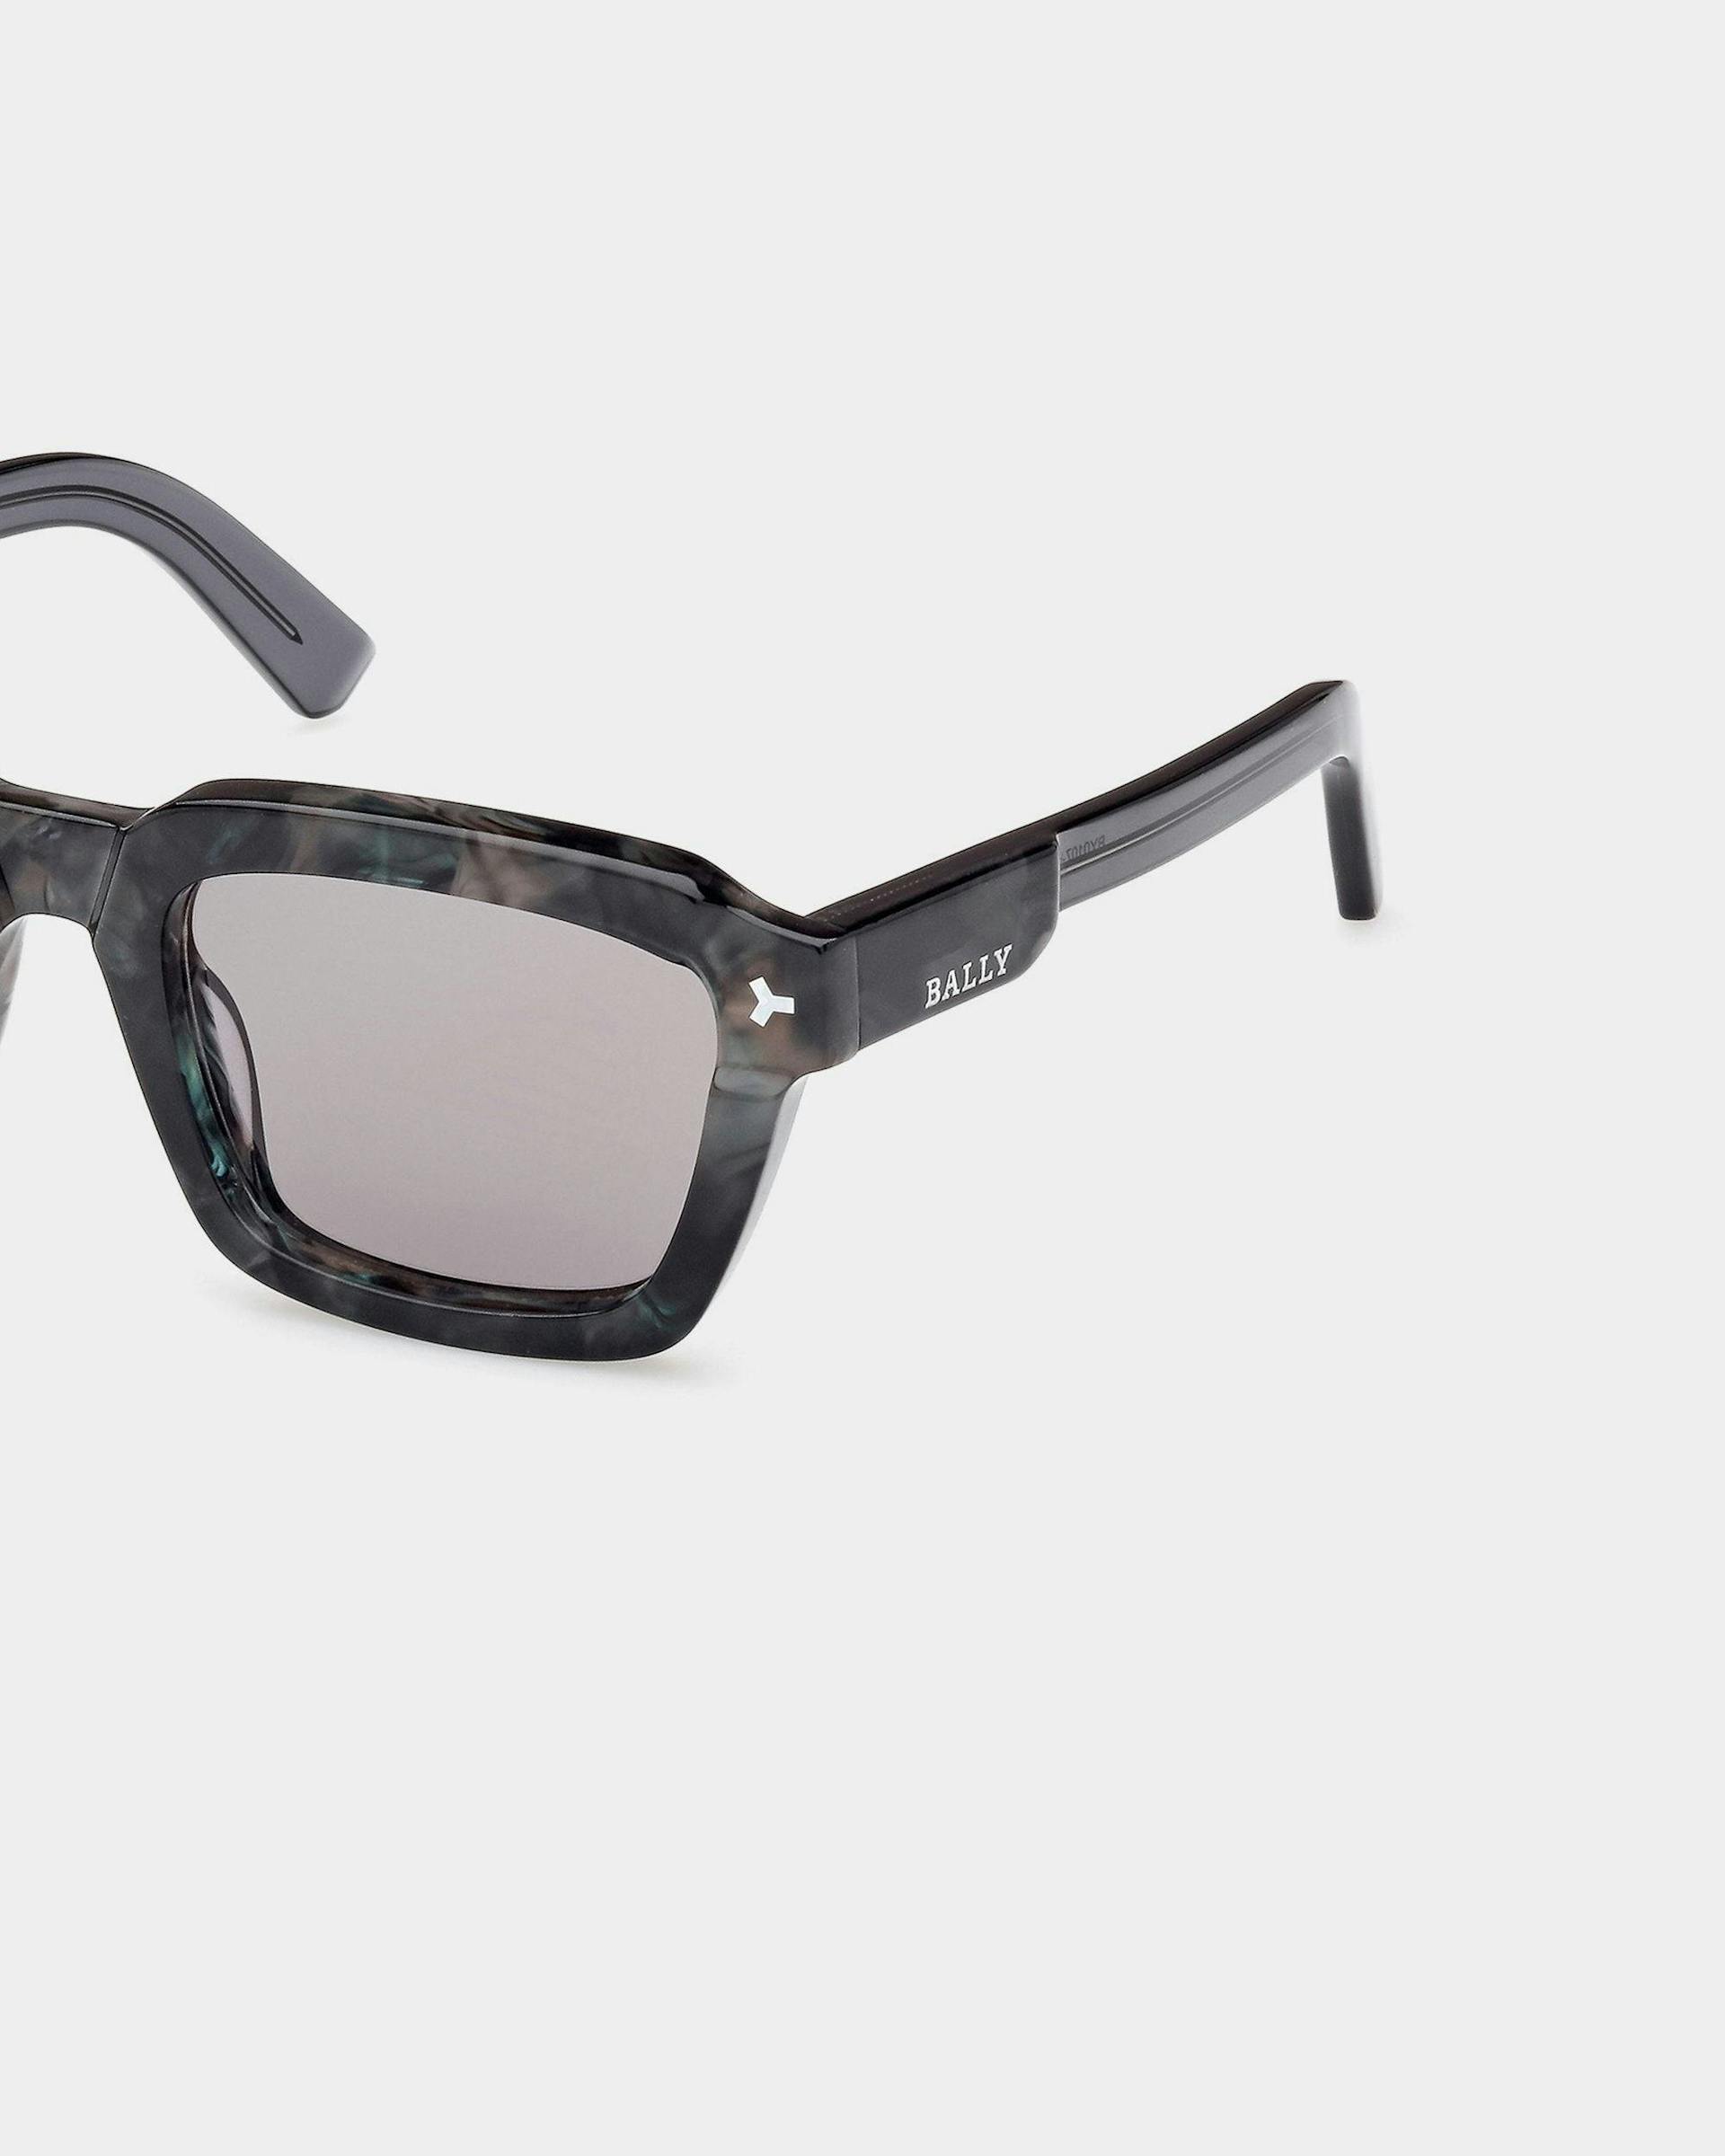 Nicholas Rectangular Full Rim Sunglasses In Black And Gray Plastic - Men's - Bally - 04